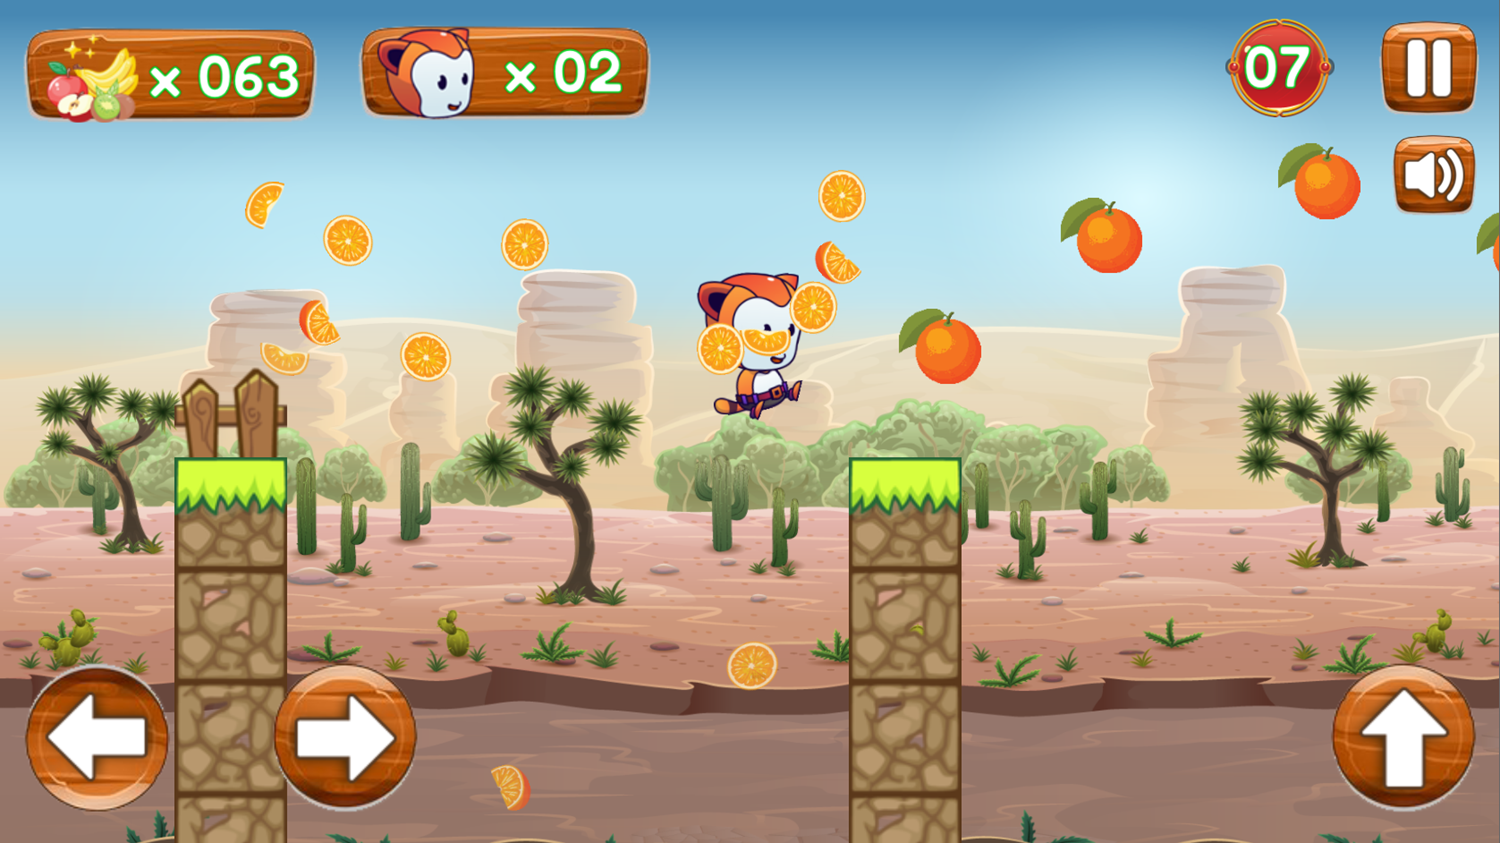 Adventure Squirrel Game Level Progress Screenshot.